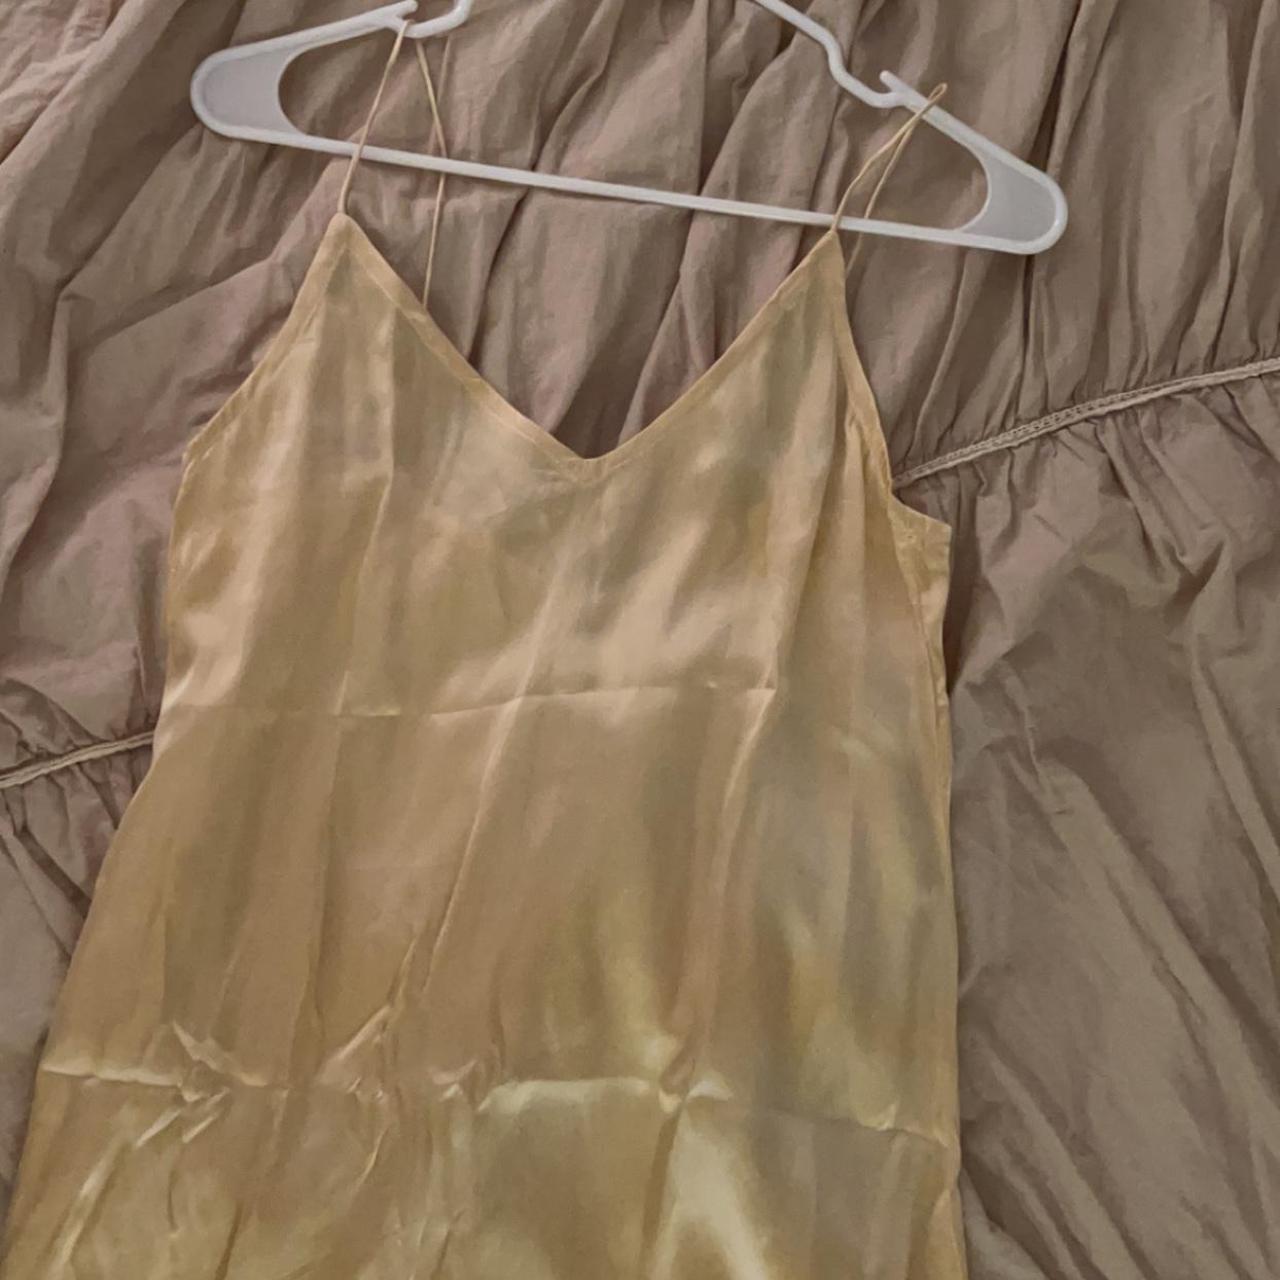 SILK SLIP DRESS yellow – BAHHGOOSE